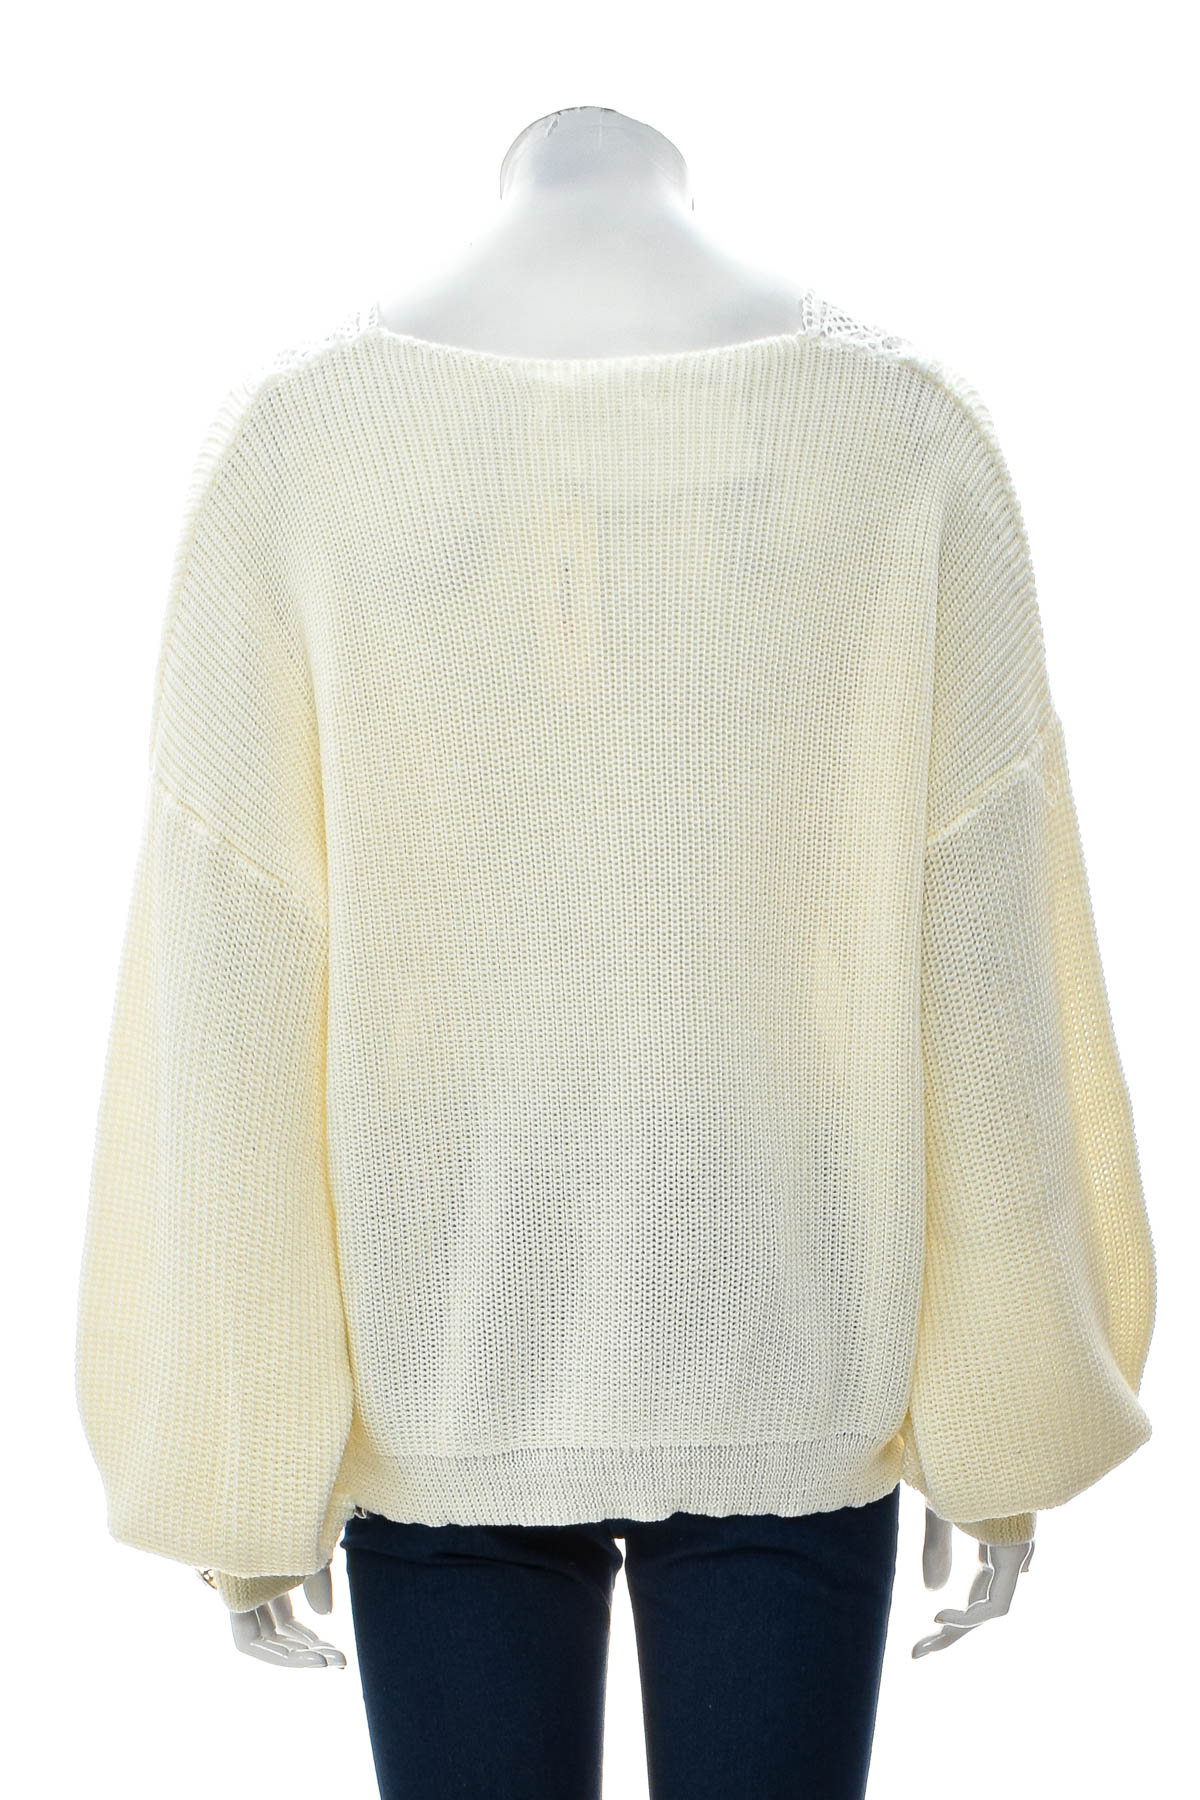 Women's sweater - OCOrderPlus - 1